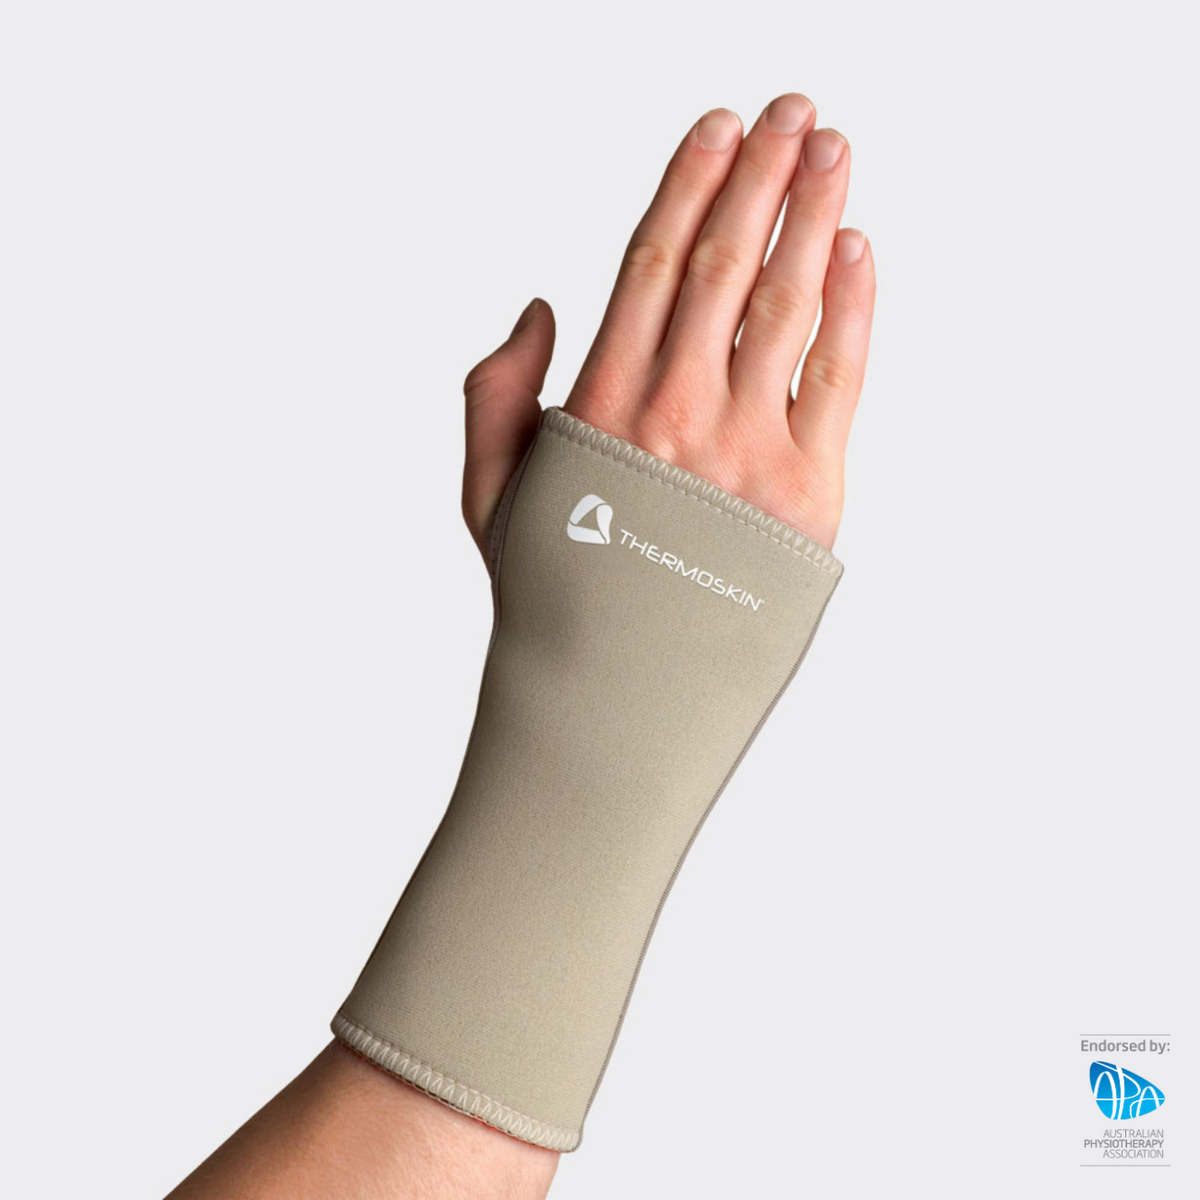 Thermoskin Wrist/Hand Brace